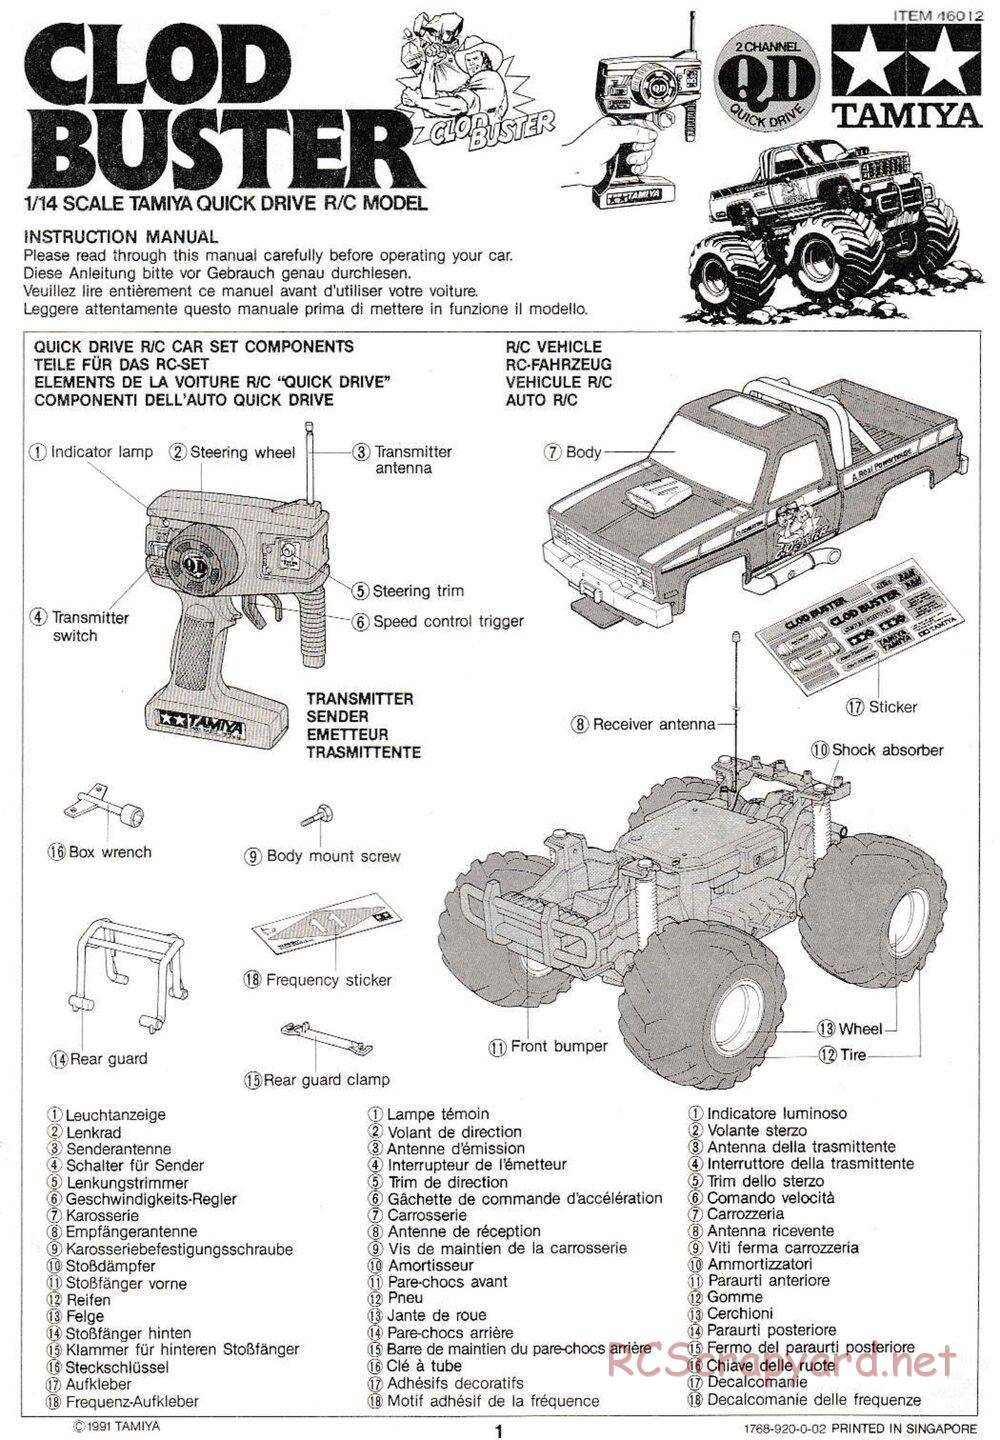 Tamiya - Clod Buster QD Chassis - Manual - Page 1